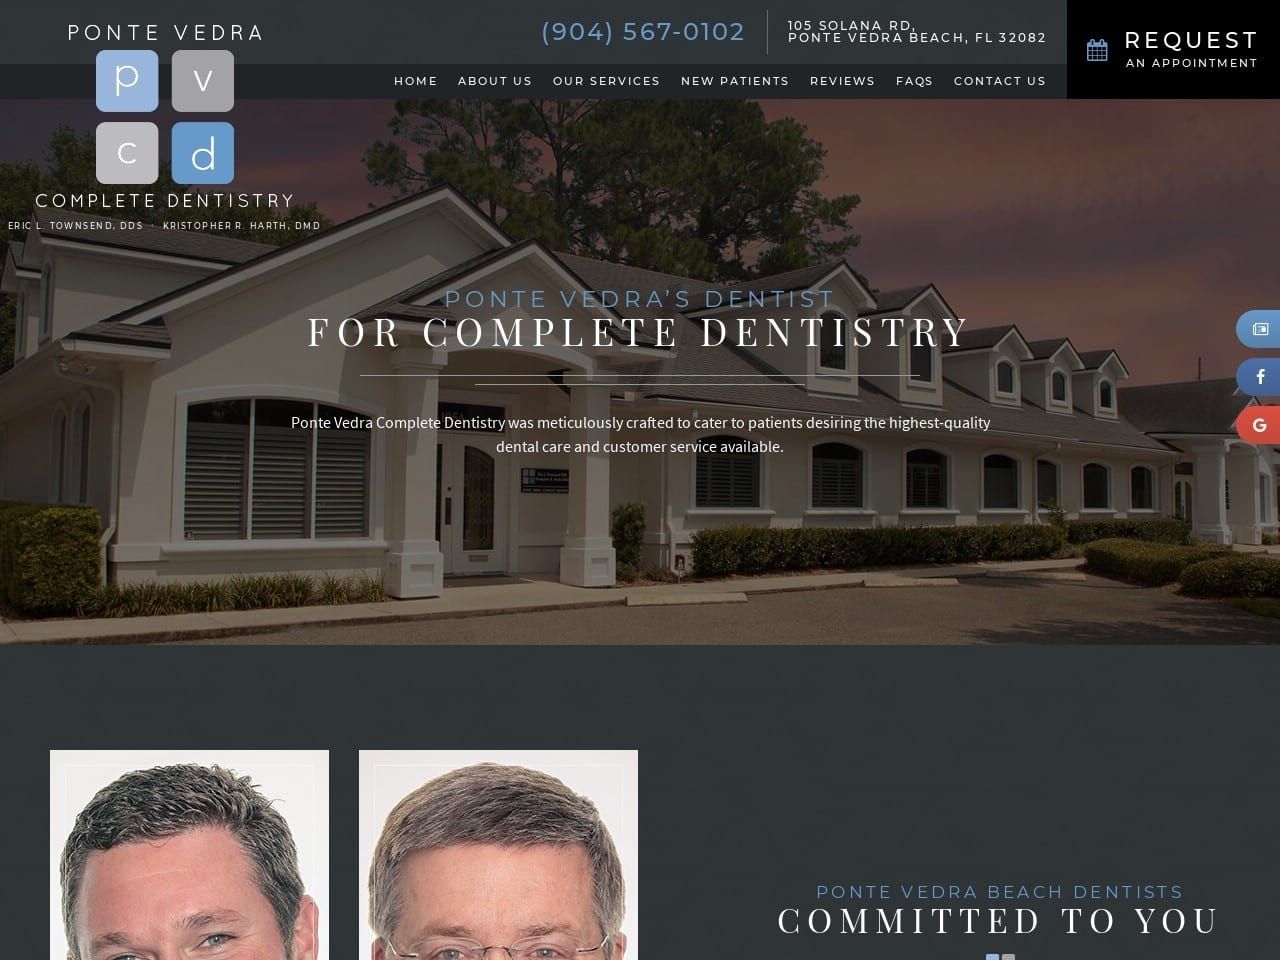 Ponte Vedra Complete Dentist Website Screenshot from pvcompletedentistry.com